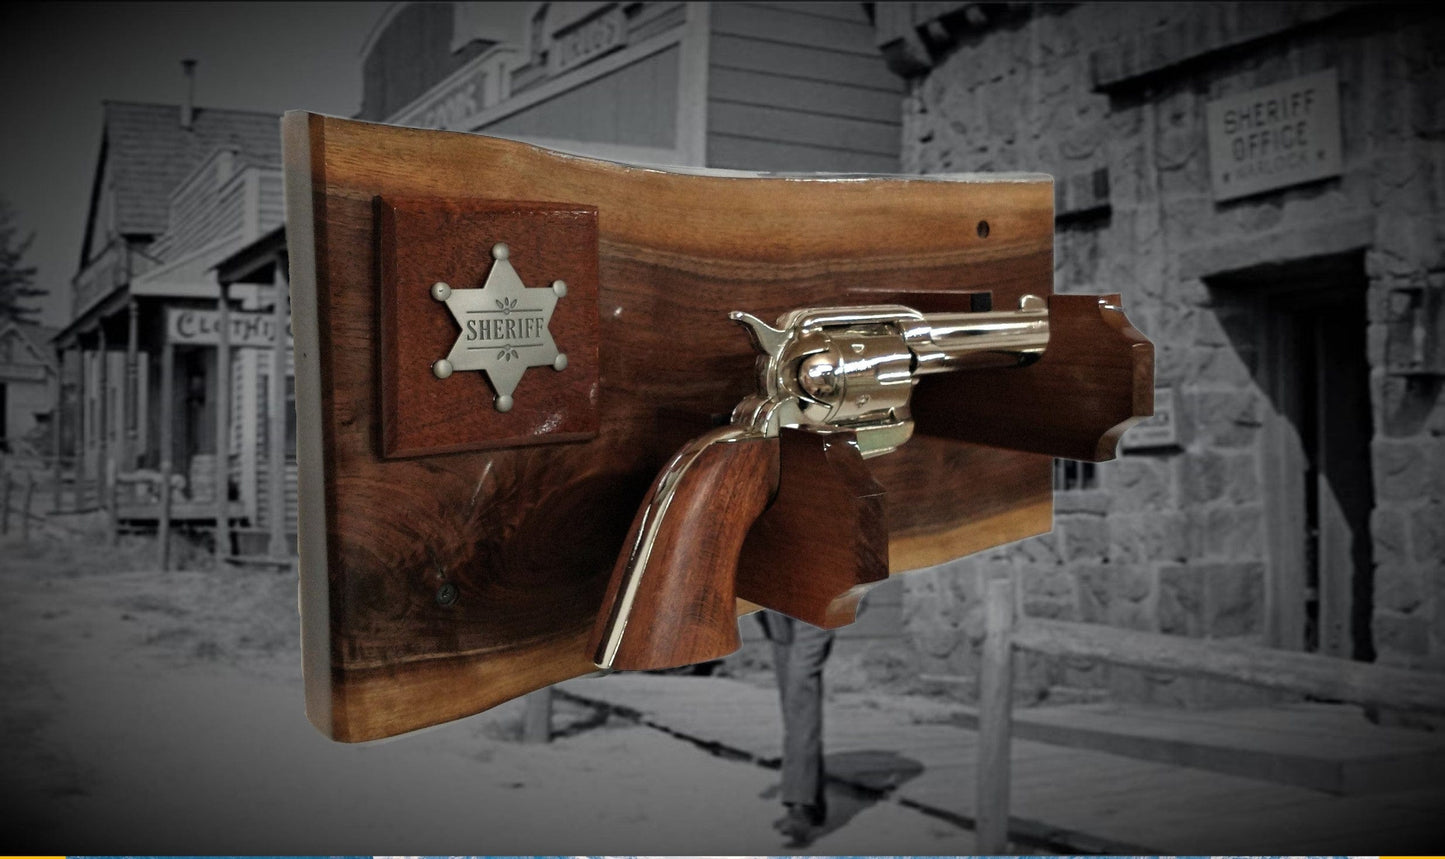 walkerwoodgifts SOLID WALNUT PISTOL Display, Rustic Sheriff Badge Gun Rack Wall Mount Western Décor Gift